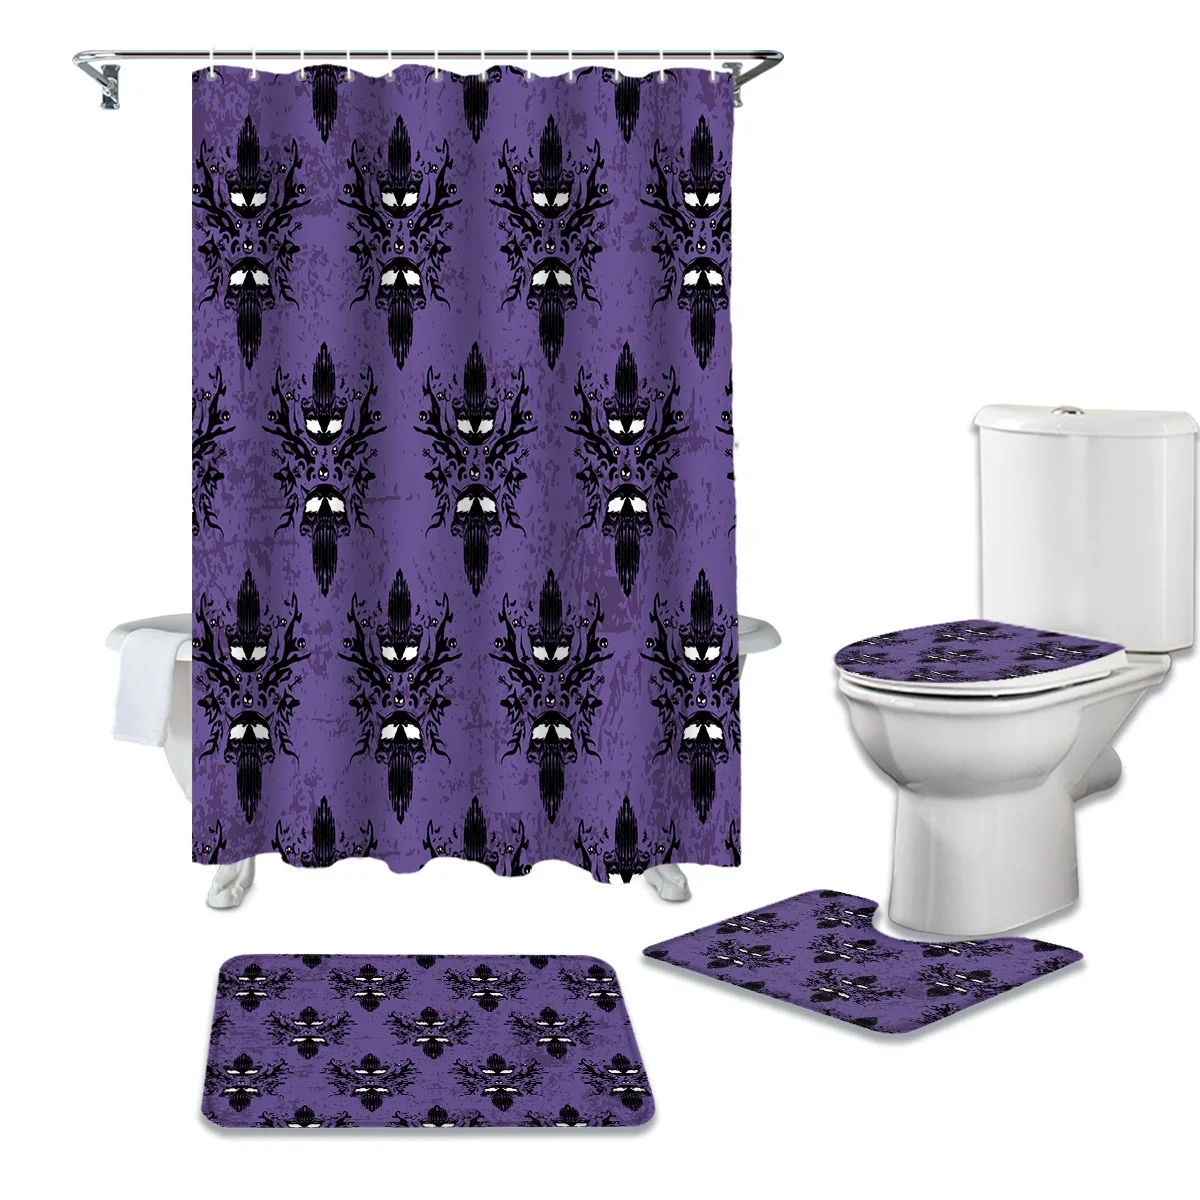 3 Piece Bathroom Set Super Water Resistant Shower Curtain Soft Feeling Bath Rug Set For Shower Room Buy Bathroom Bath Sets